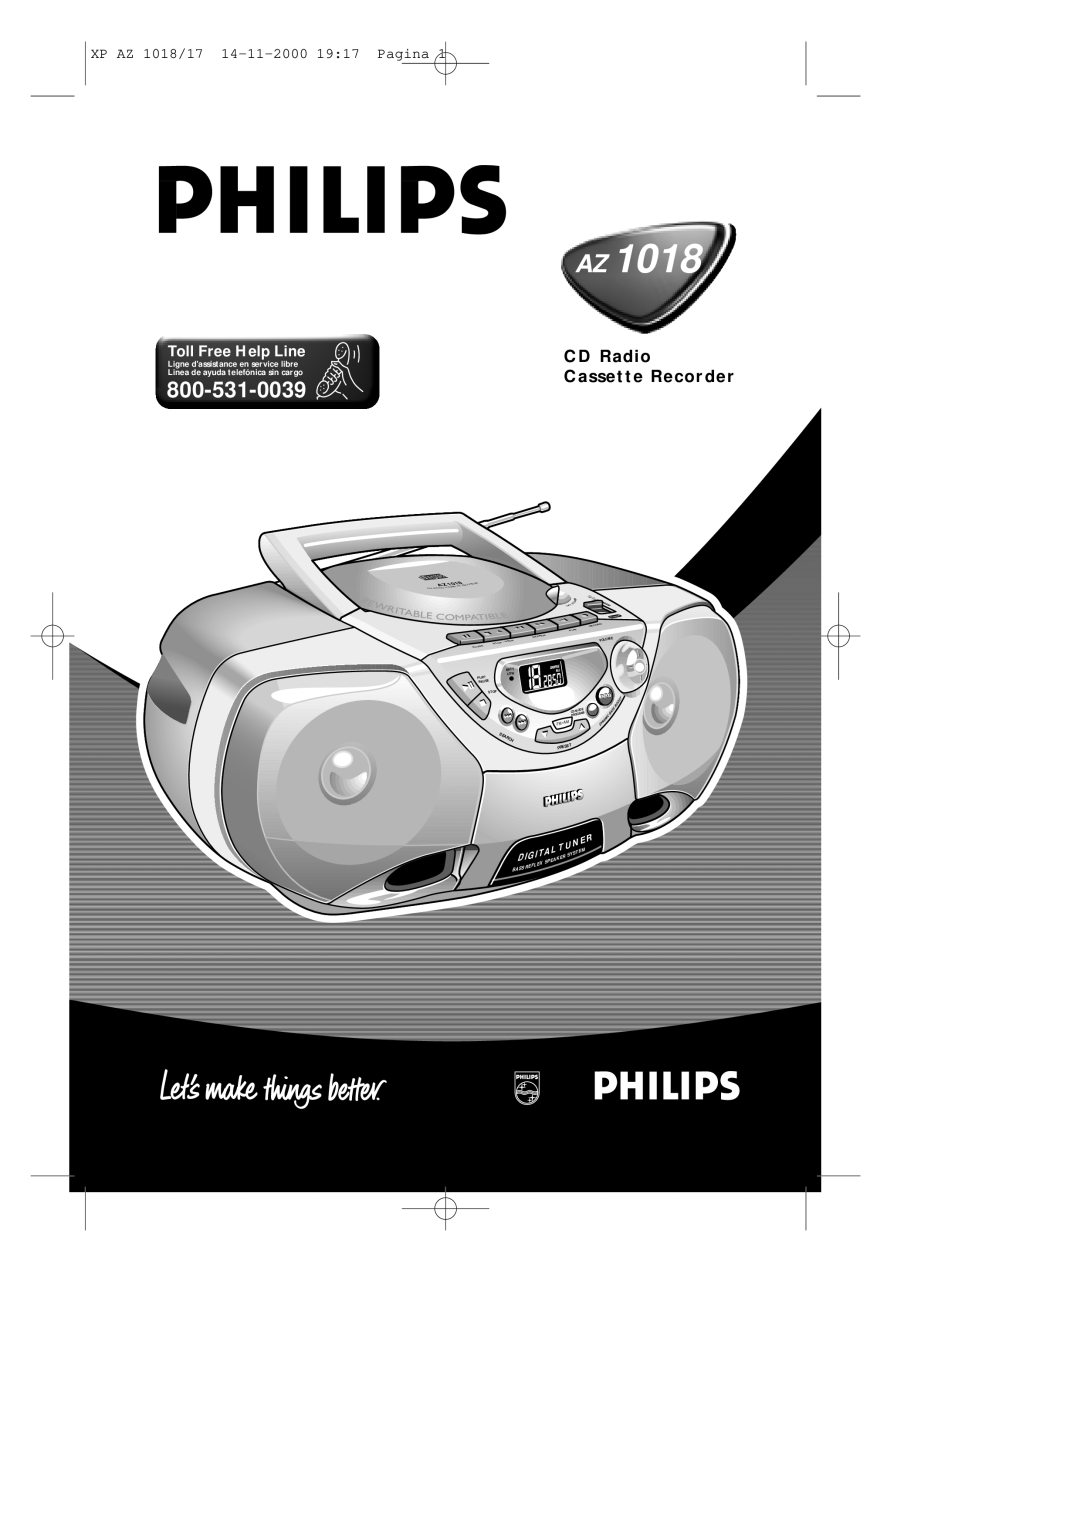 Philips manual CD Radio Cassette Recorder, XP AZ 1018/17 14-11-2000 1917 Pagina, Toll Free Help Line, Igit, Search 